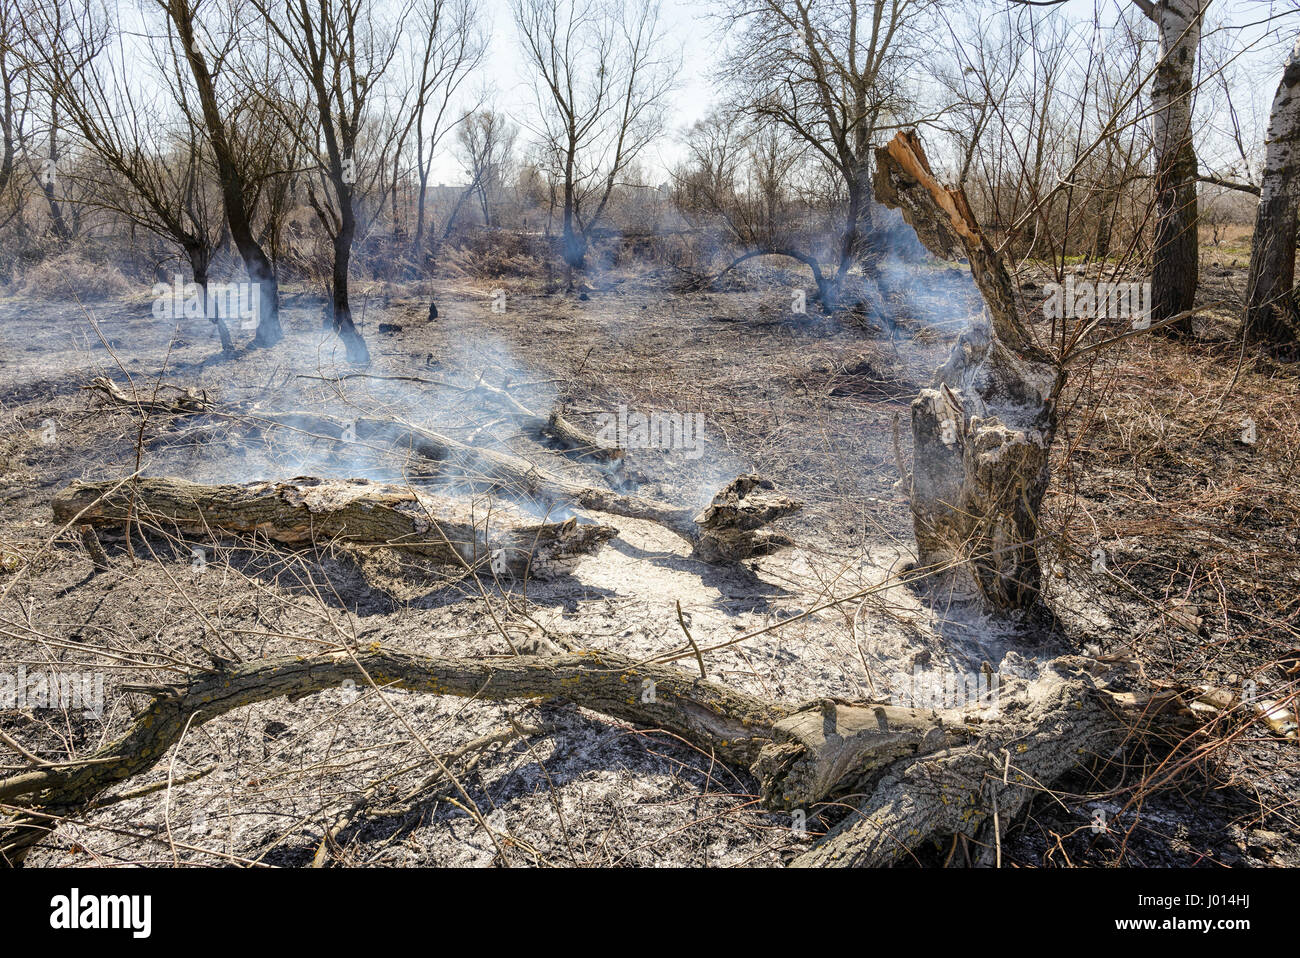 Burning and smoking trees in burnt wasteland. Stock Photo